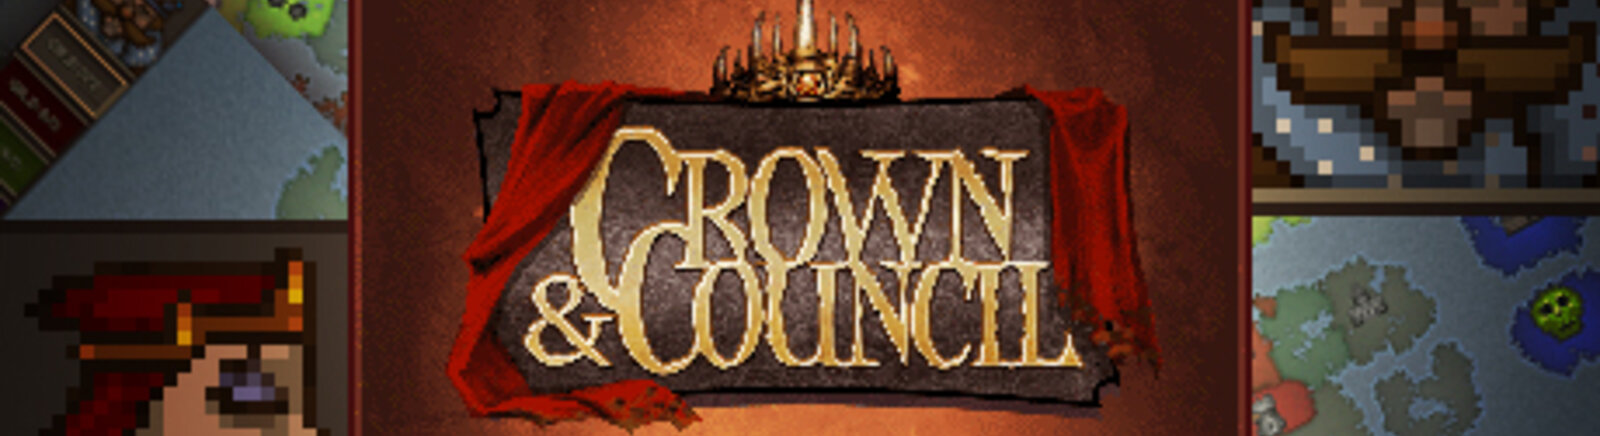 Дата выхода Crown and Council  на PC в России и во всем мире